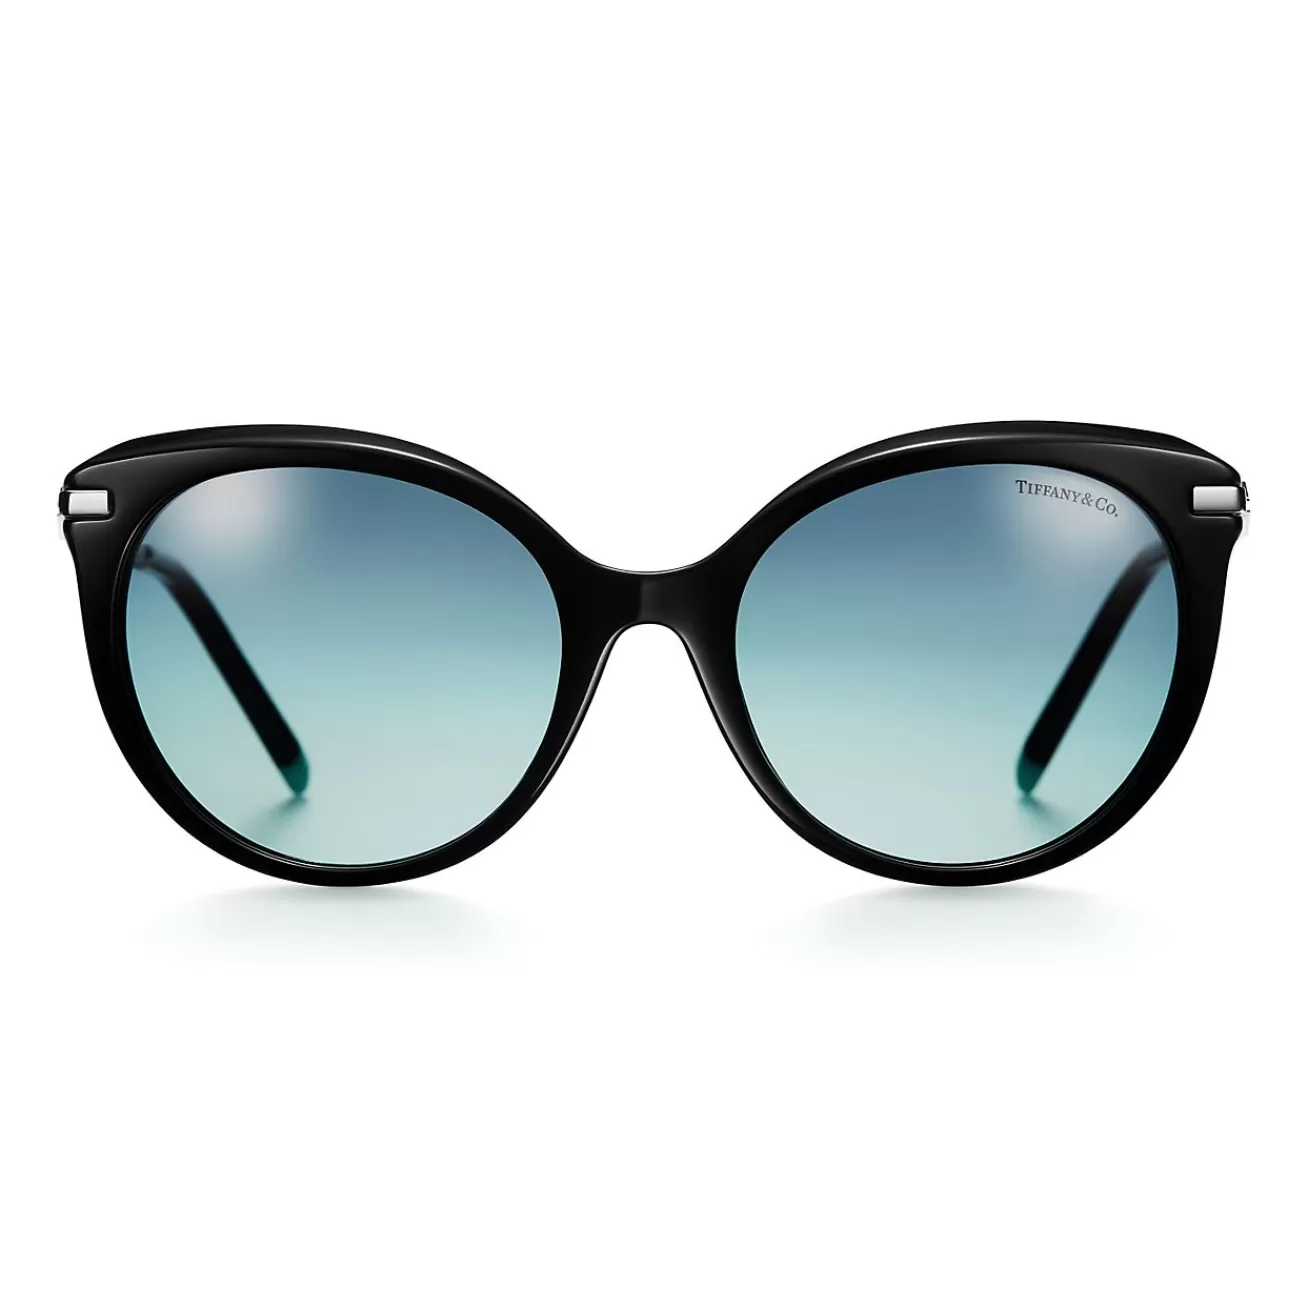 Tiffany & Co. Tiffany Victoria® Sunglasses in Black Acetate with Gradient Tiffany Blue® Lenses | ^ Tiffany Victoria® | Sunglasses